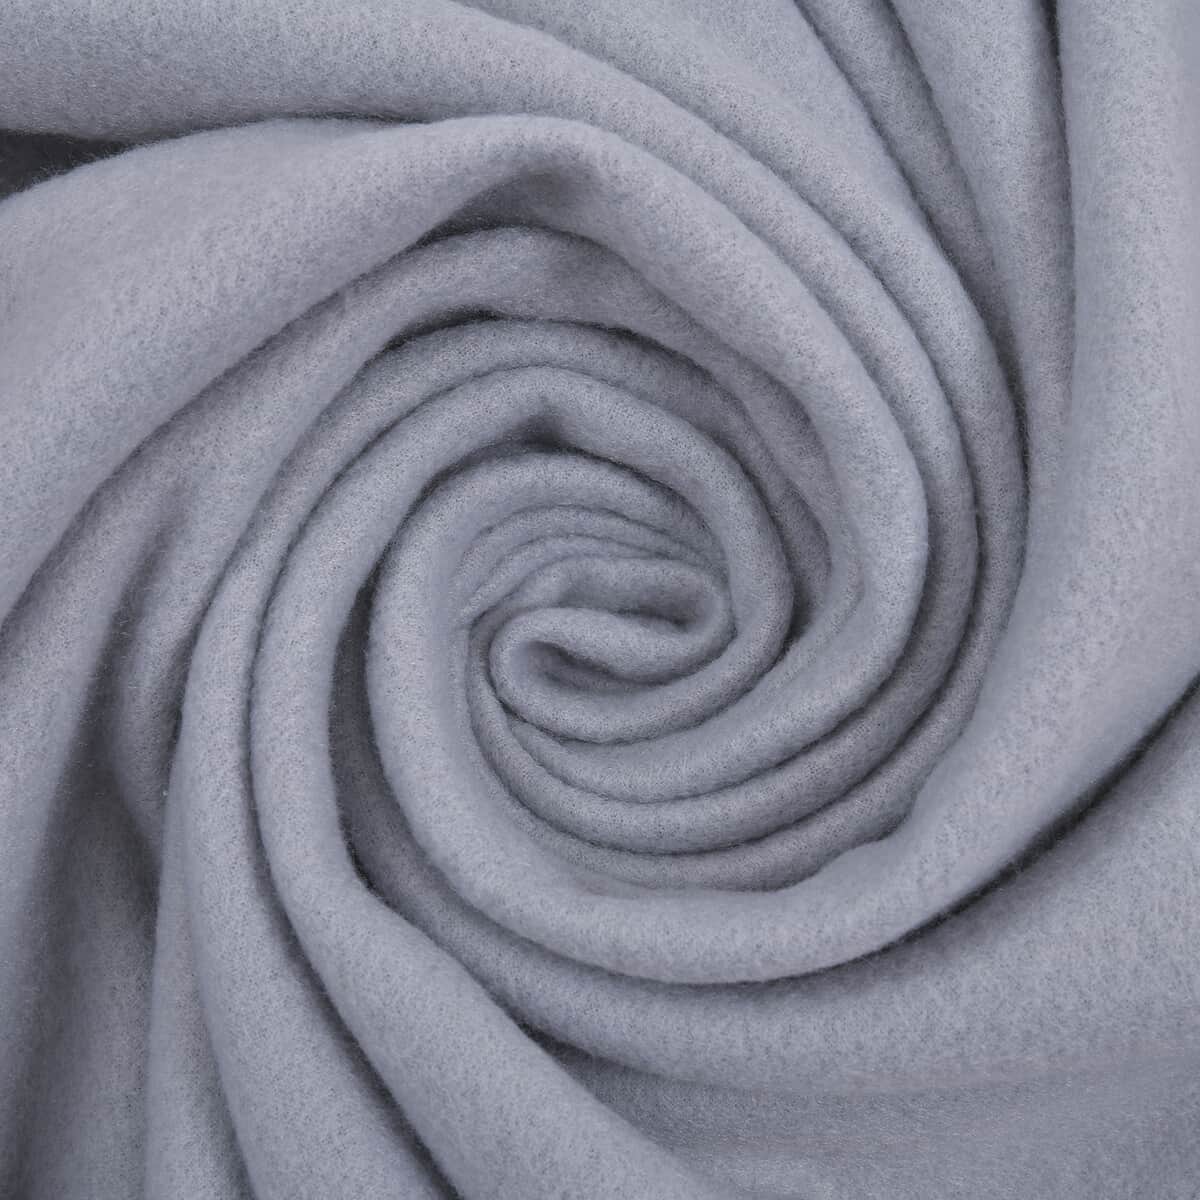 Homesmart 2 in 1 Gray Solid Fleece Travel Blanket with Folded Storage Pocket (Microfiber) image number 5